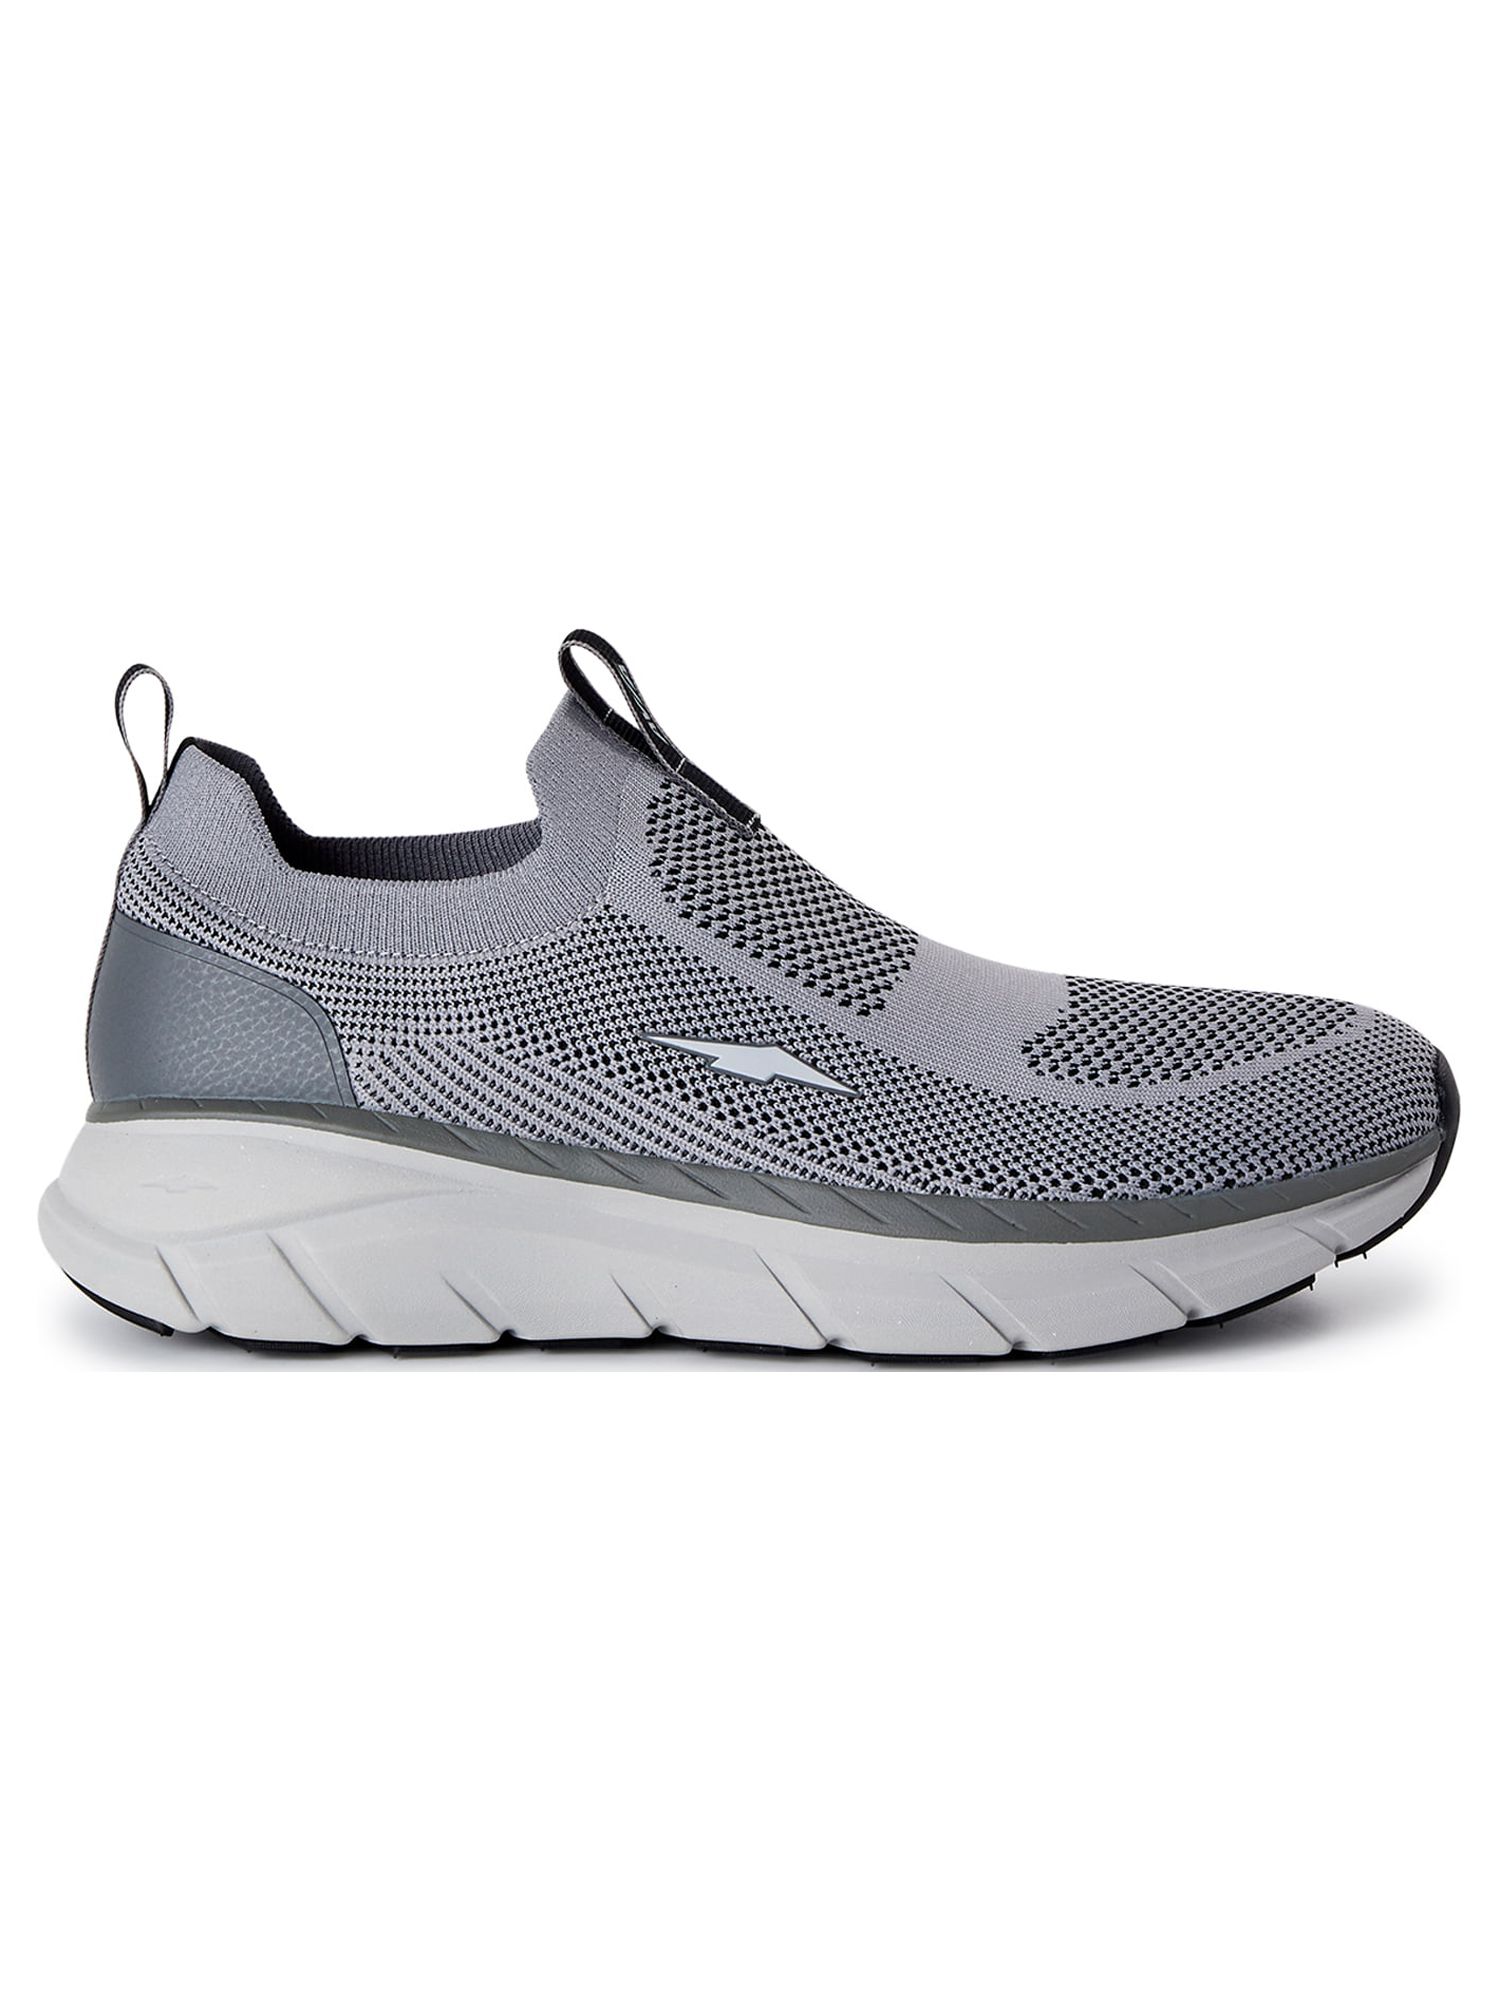 Avia Men’s Hightail Slip-On Walking Sneakers - Walmart.com